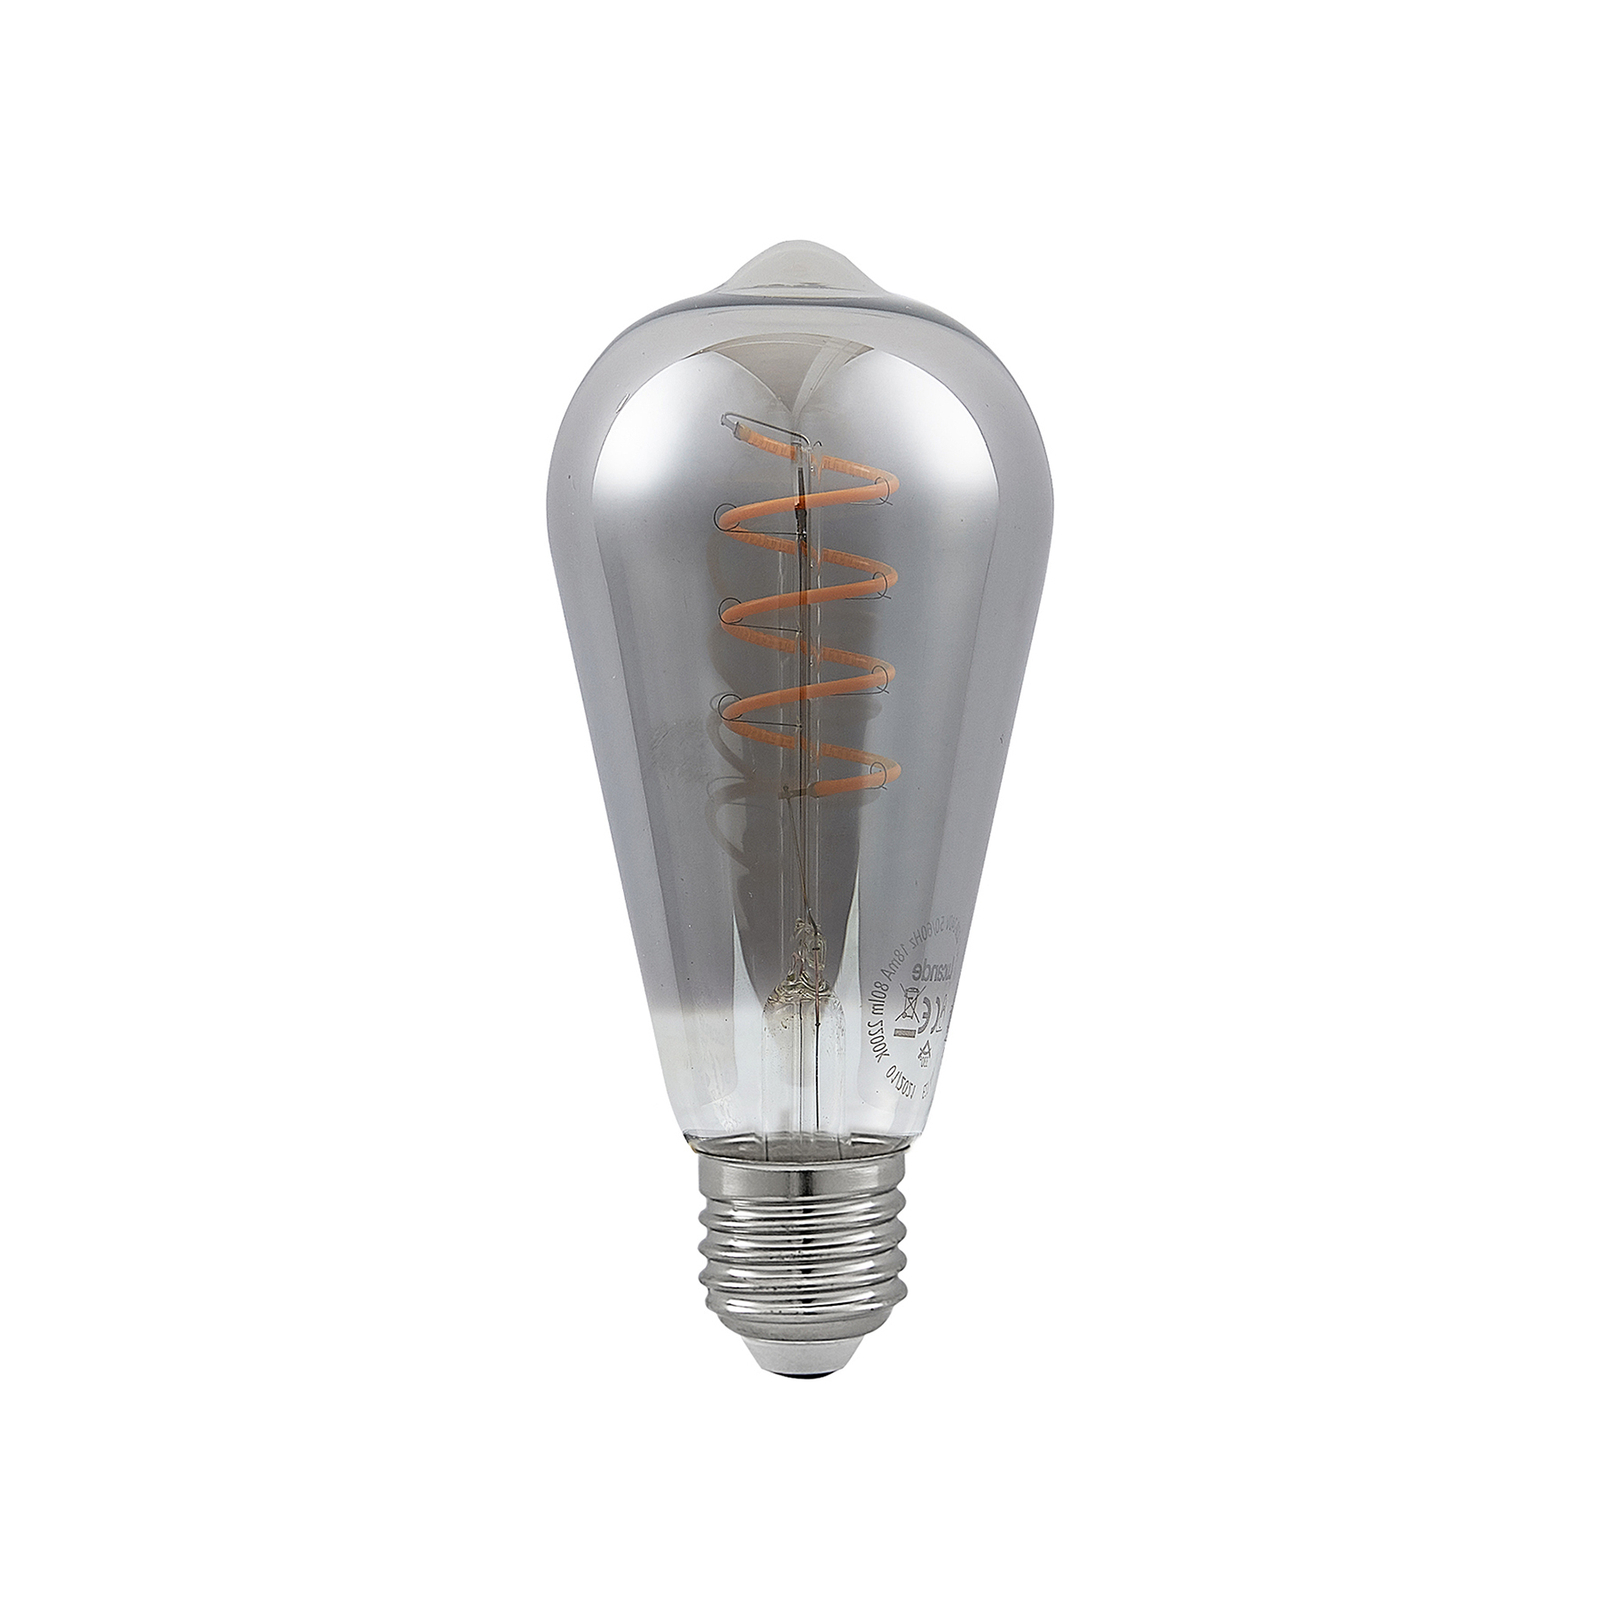 Lucande LED bulb E27 ST64 4W 1,800K dimmable smoke